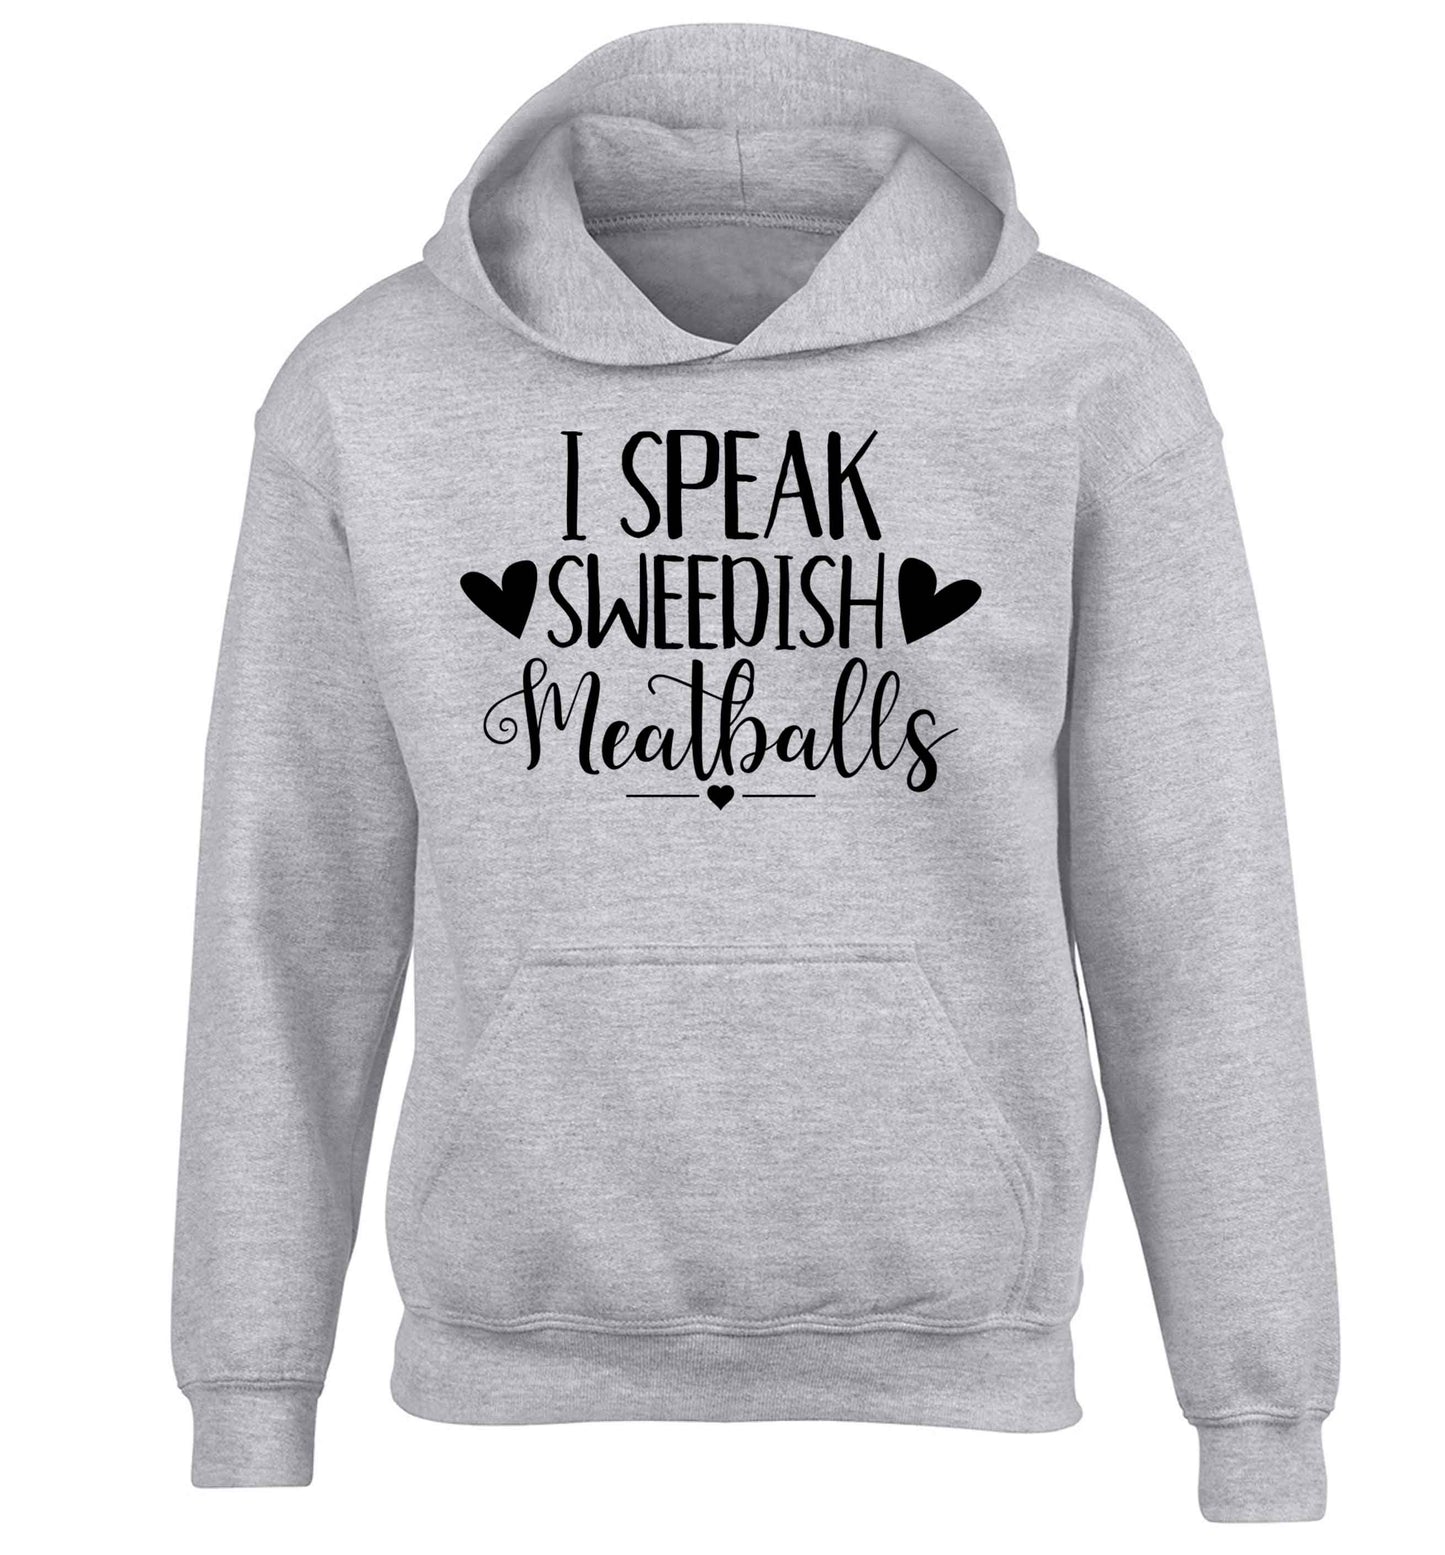 I speak sweedish...meatballs children's grey hoodie 12-13 Years